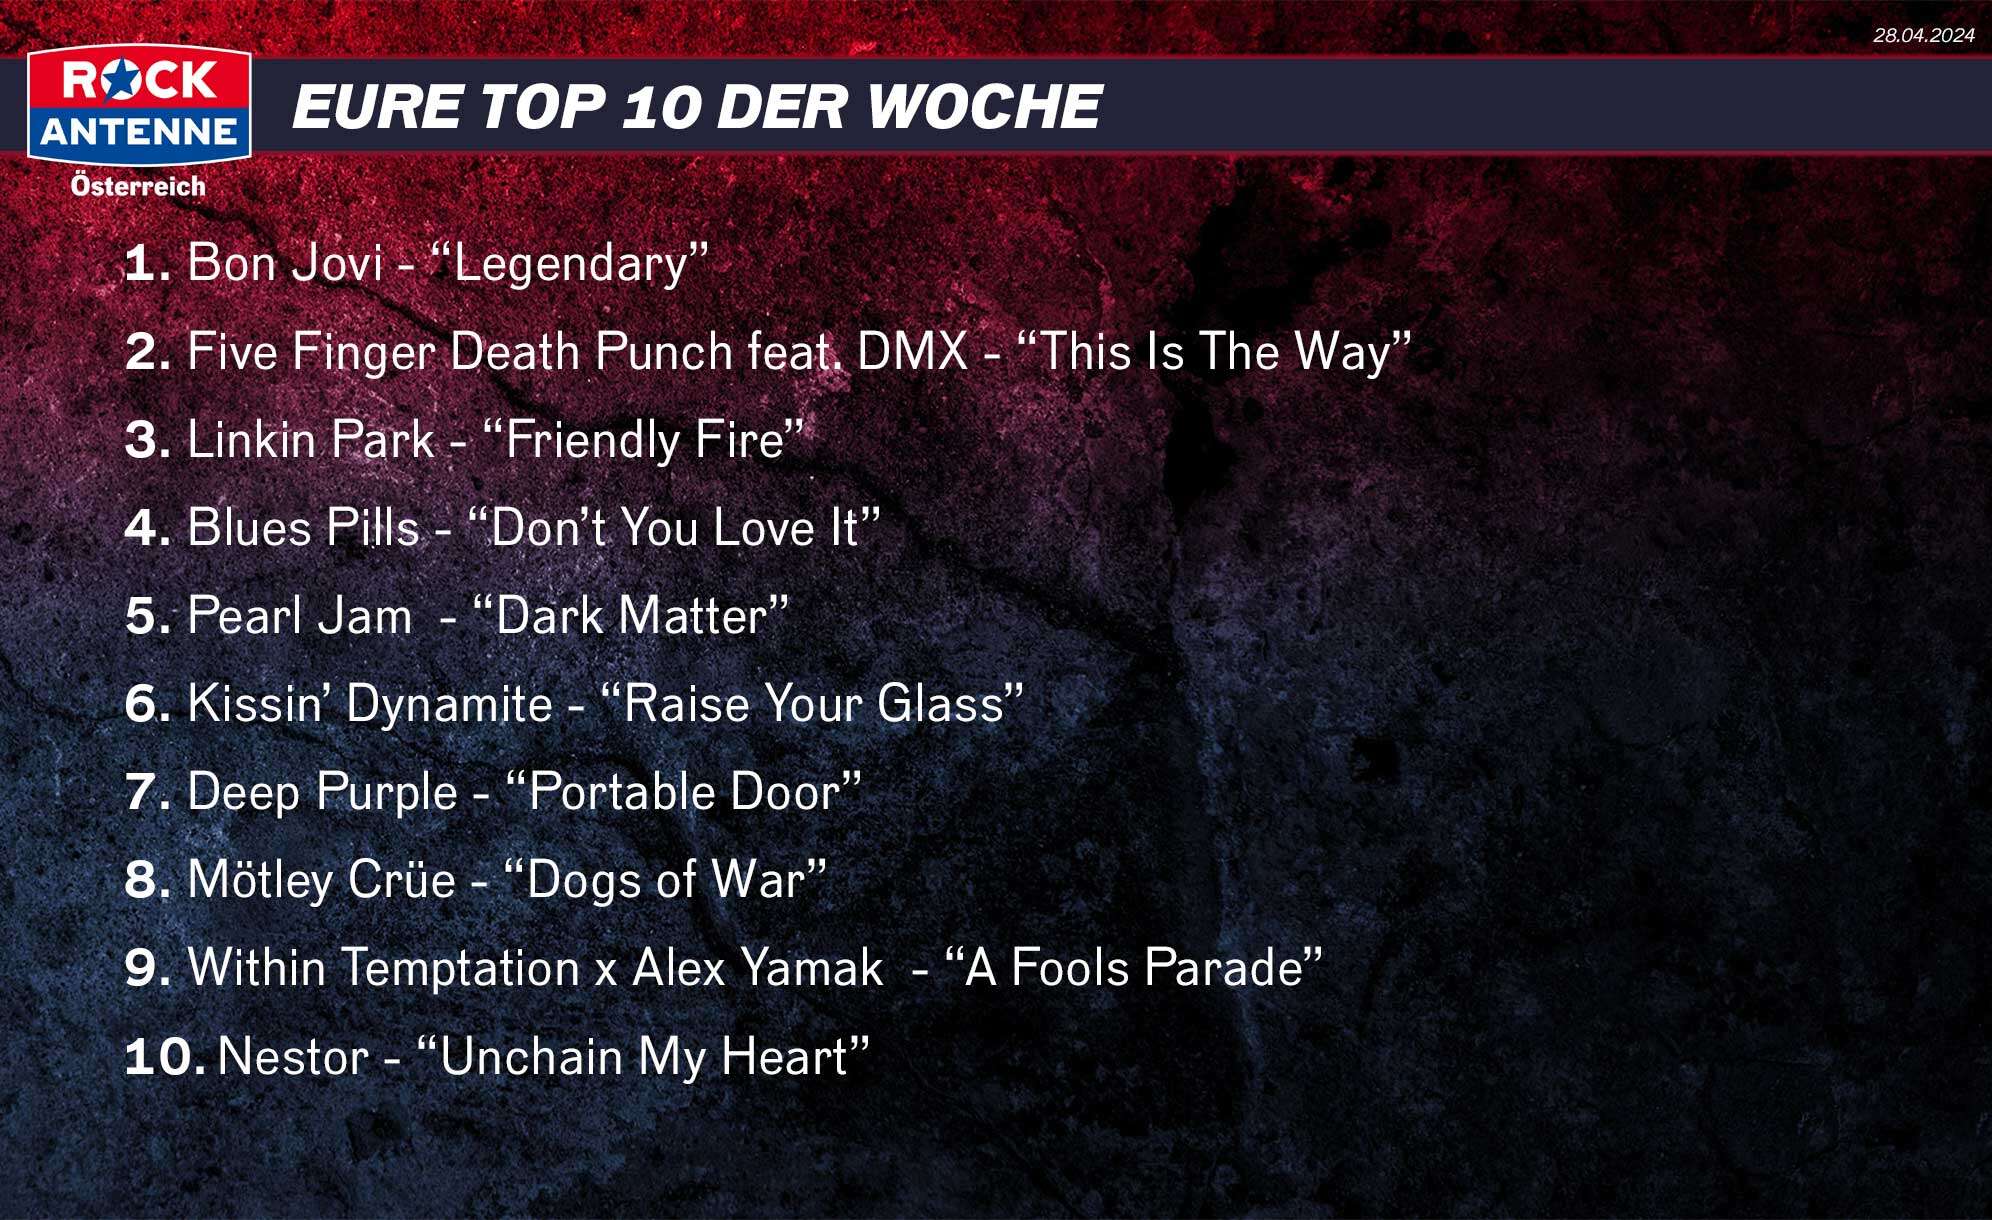 Die Top Ten der Woche vom 19.05.2024 lauten: 1. Bon Jovi - “Legendary” 2. Five Finger Death Punch feat. DMX - “This Is The Way” 3. Linkin Park - “Friendly Fire” 4. Blues Pills - “Don’t You Love It” 5. Pearl Jam  - “Dark Matter” 6. Kissin’ Dynamite - “Raise Your Glass” 7. Deep Purple - “Portable Door” 8. Mötley Crüe - “Dogs of War” 9. Within Temptation x Alex Yamak  - “A Fools Parade” 10. Nestor - “Unchain My Heart”